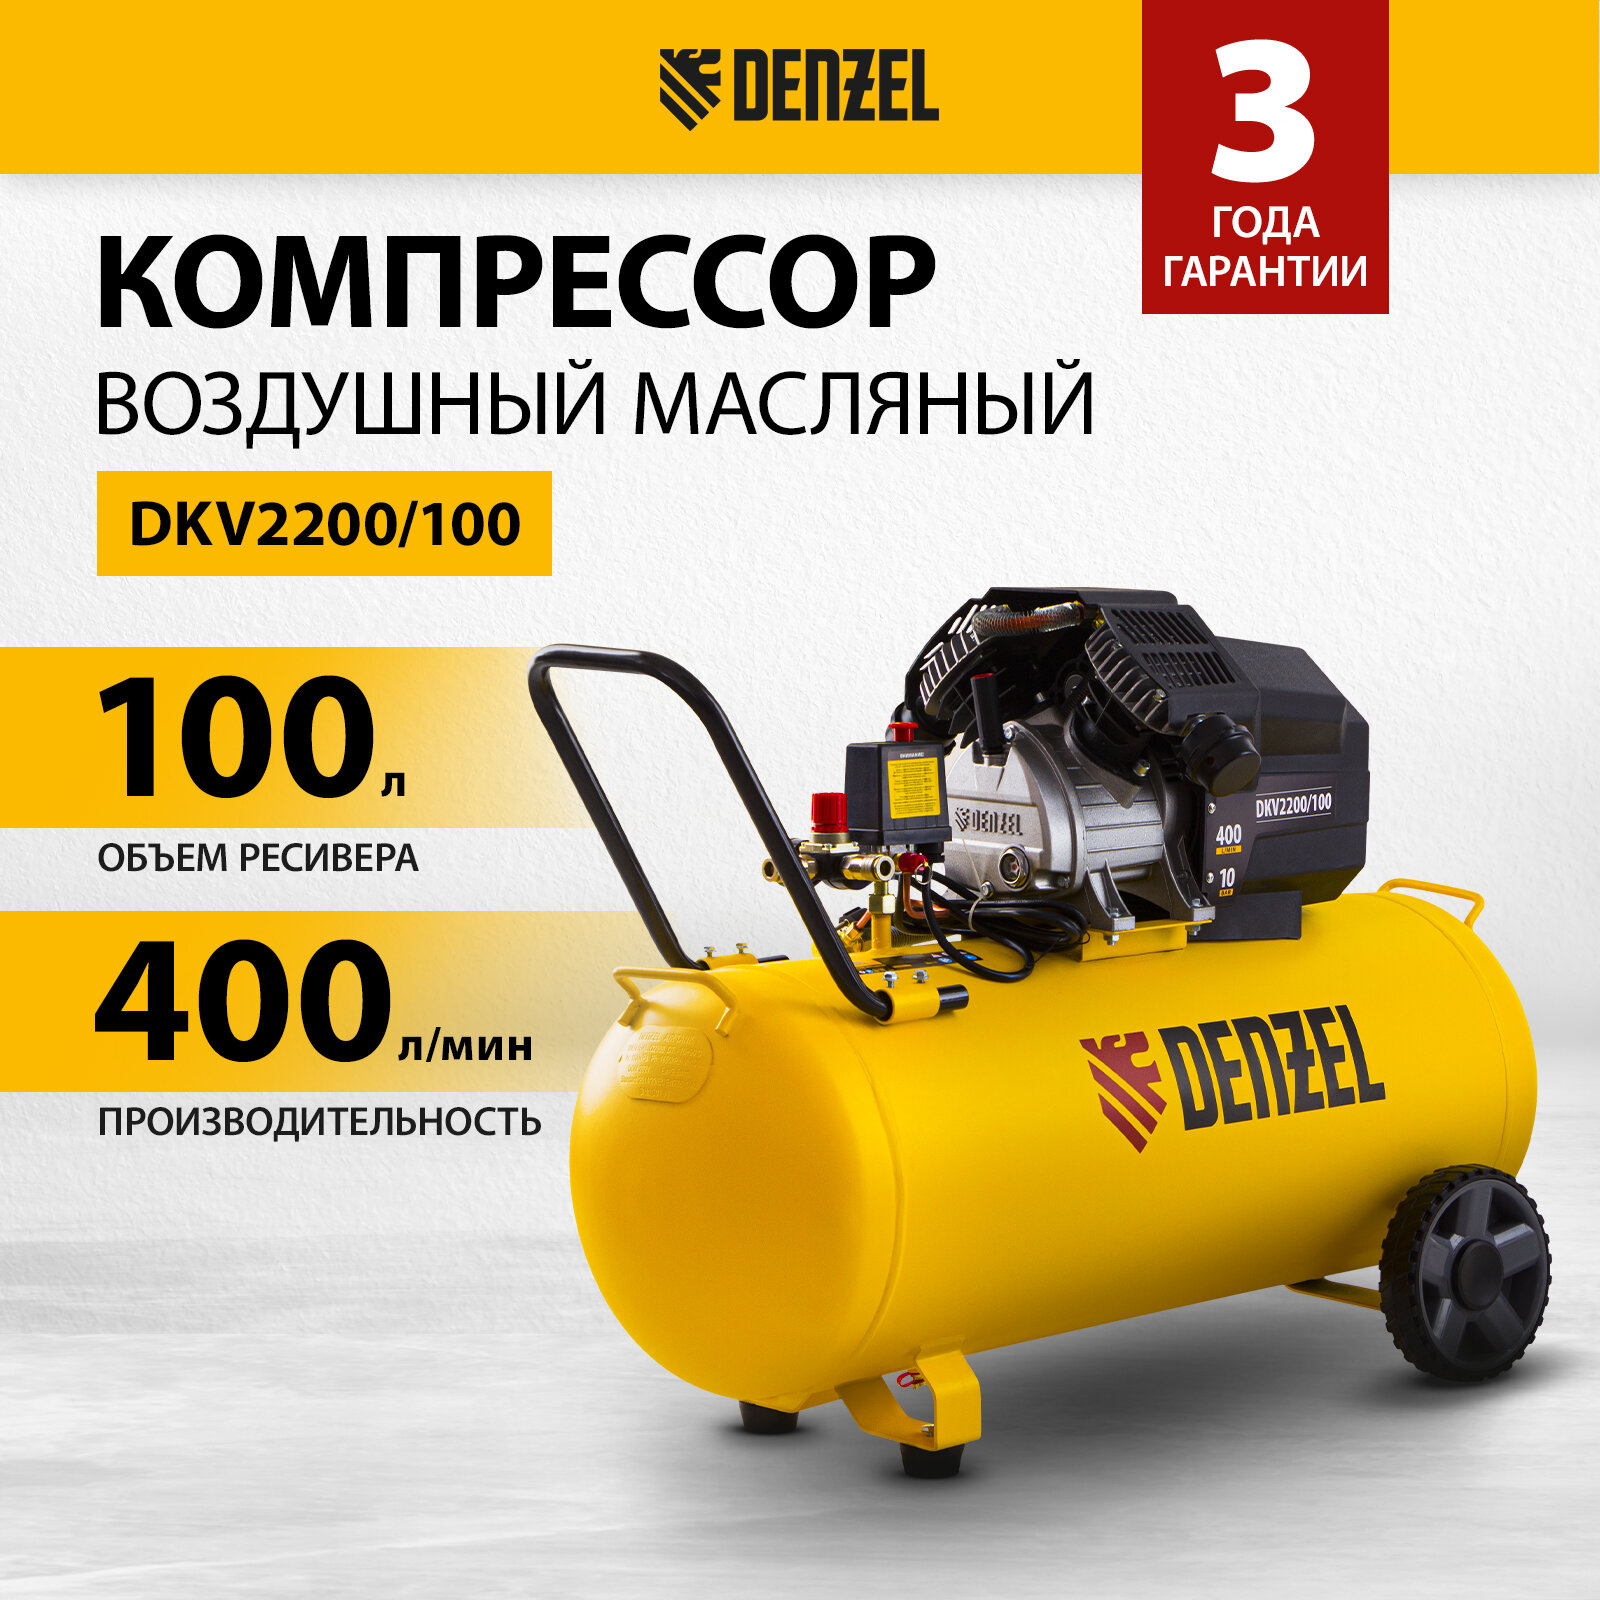 Компрессор воздушный DKV2200/100, Х-PRO 2.2 кВт, 400 л/мин, 100л Denzel Denzel